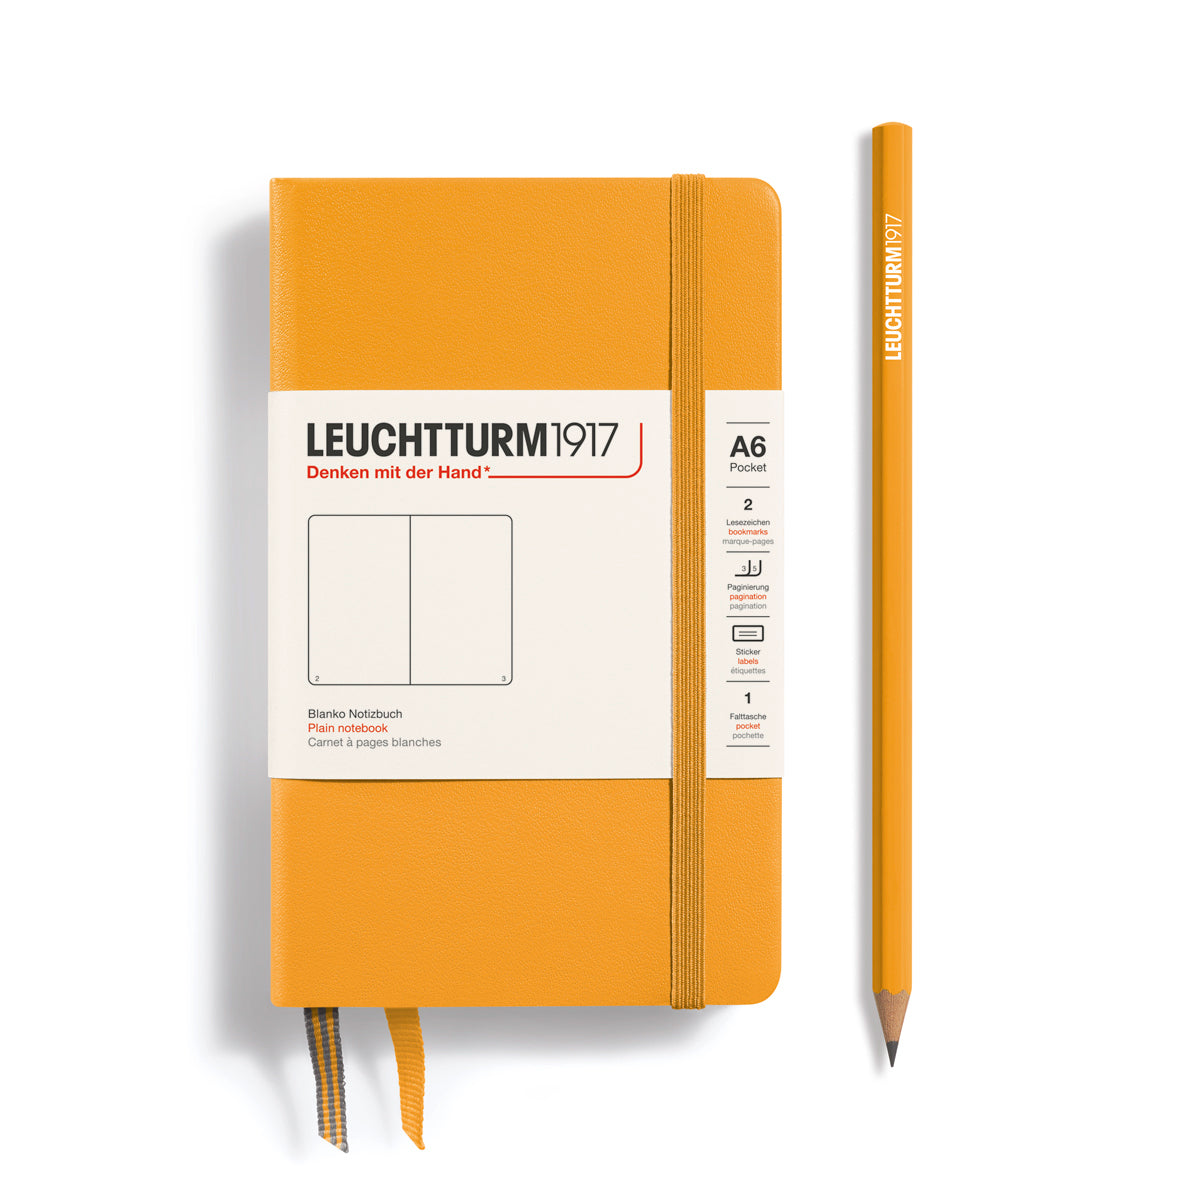 Leuchtturm1917 Notebook A6 Pocket Hardcover in rising sun orange by Penny Black - plain ruling